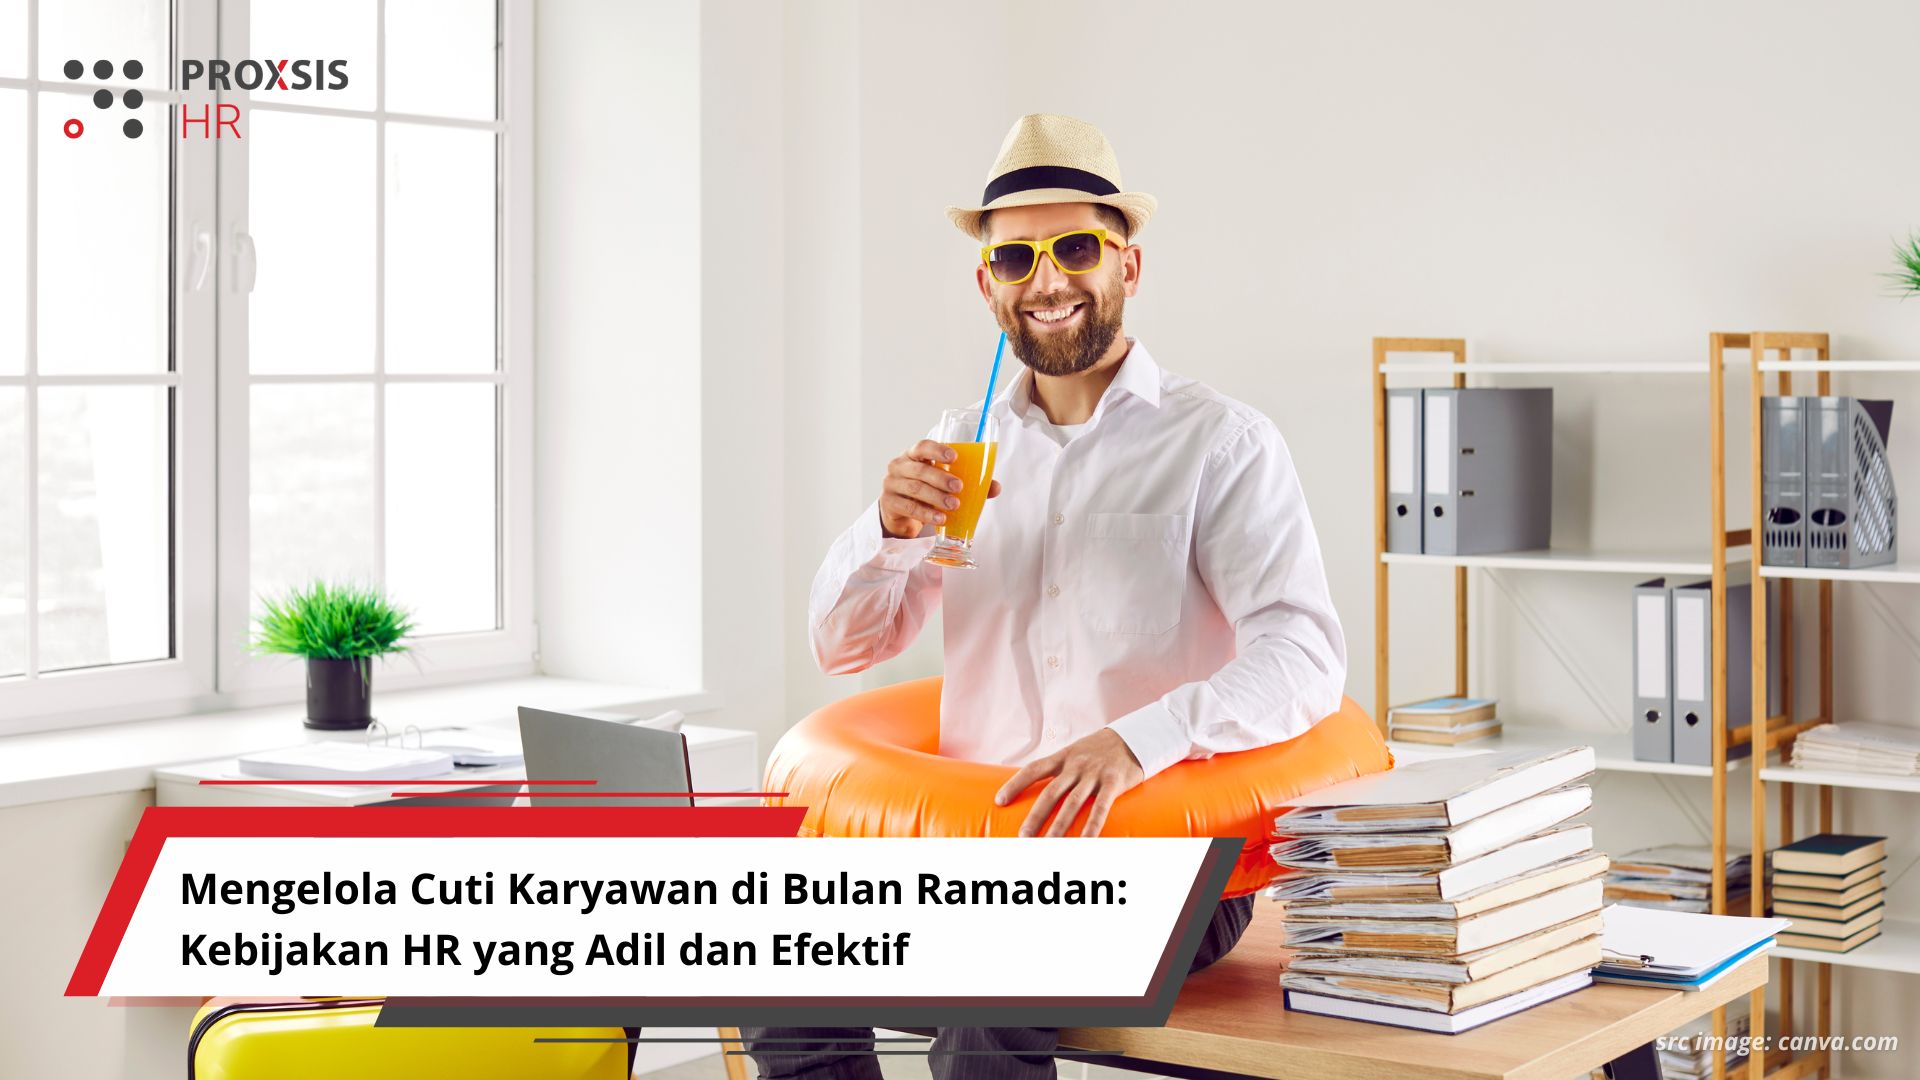 Mengelola Cuti Karyawan di Bulan Ramadan: Kebijakan HR yang Adil dan Efektif